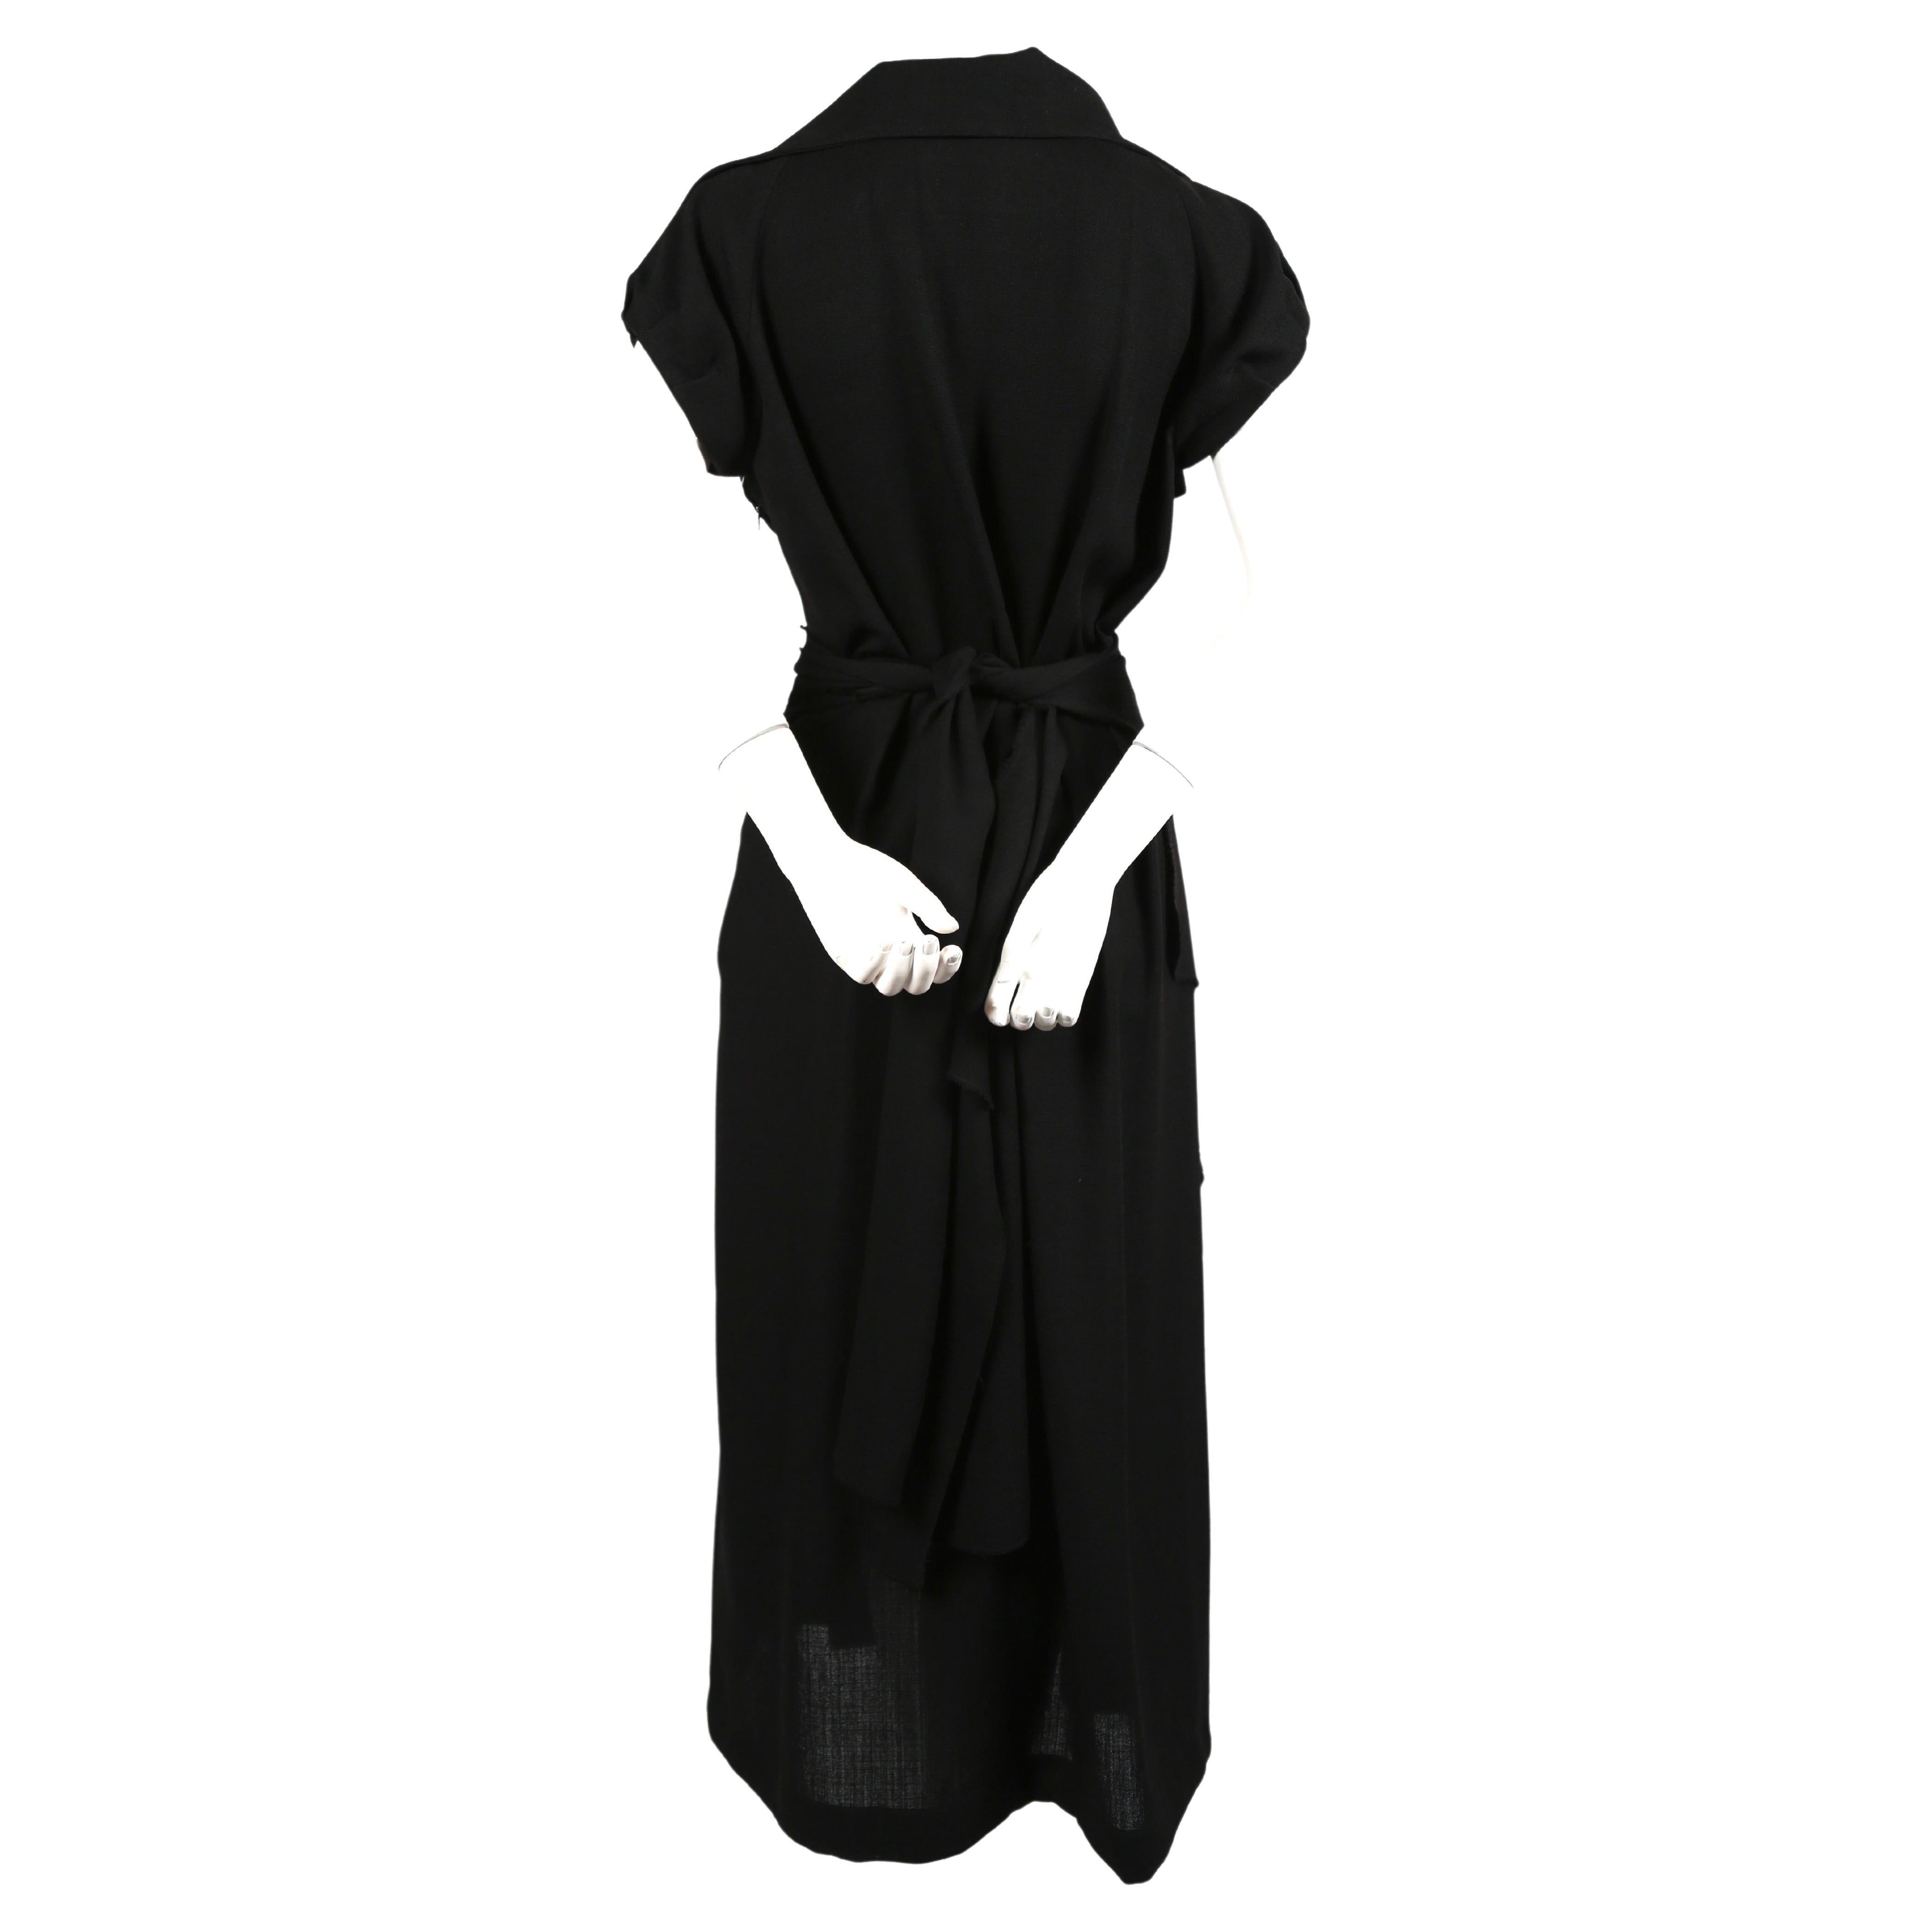 Black LOEWE black asymmetrical runway dress with raw edges